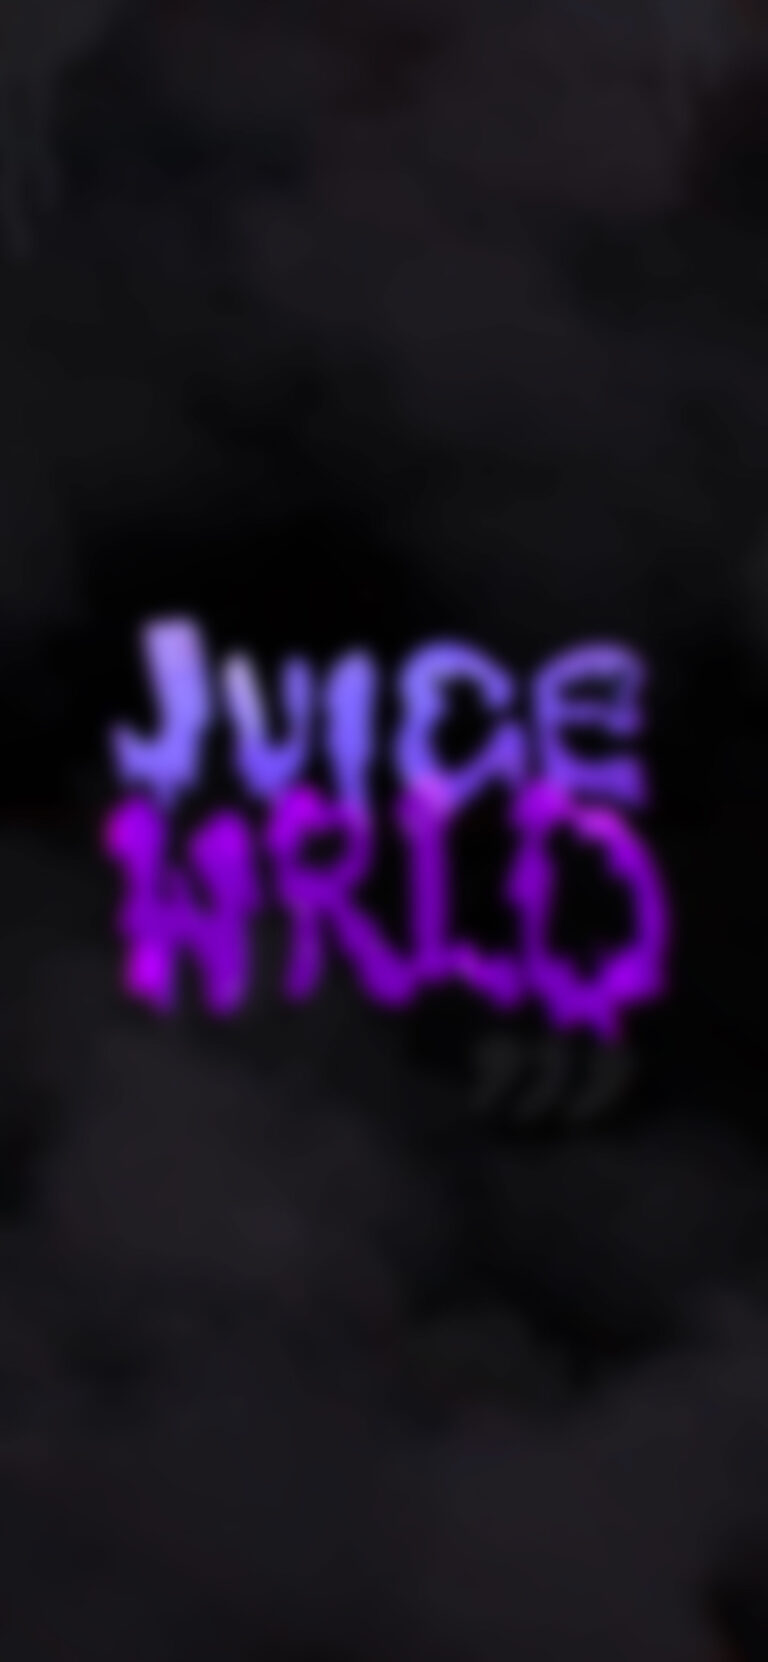 Juice WRLD Wallpaper on Black Background - Juice WRLD Background